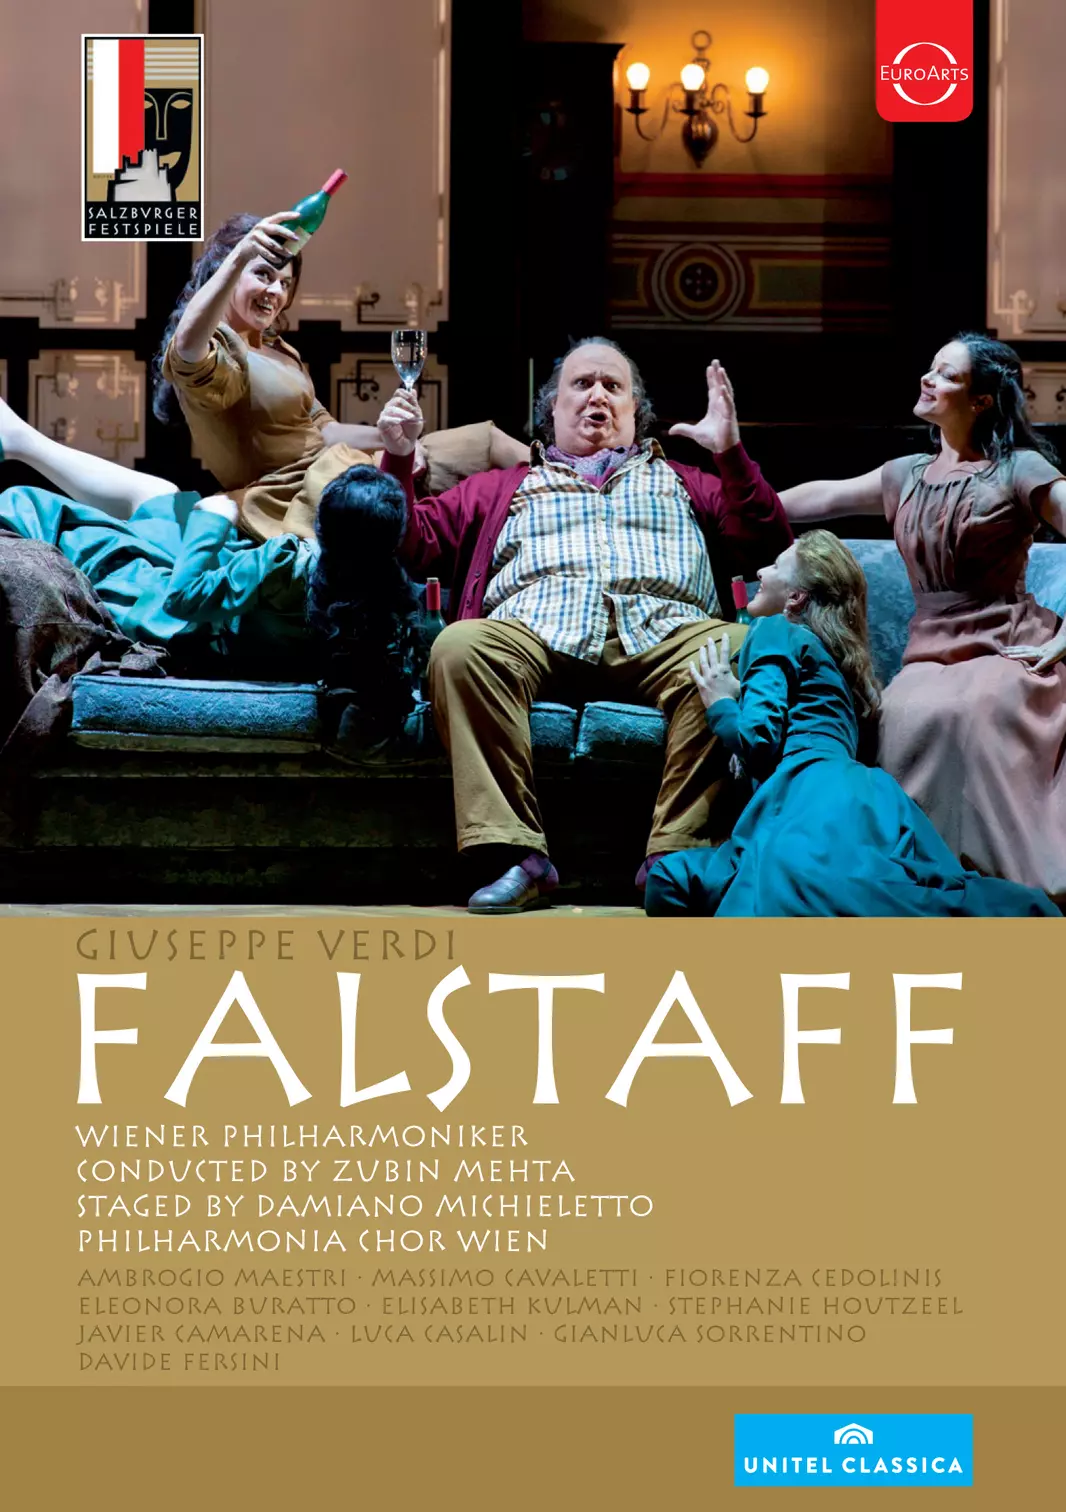 Salzburger Festspiele - Verdi: Falstaff